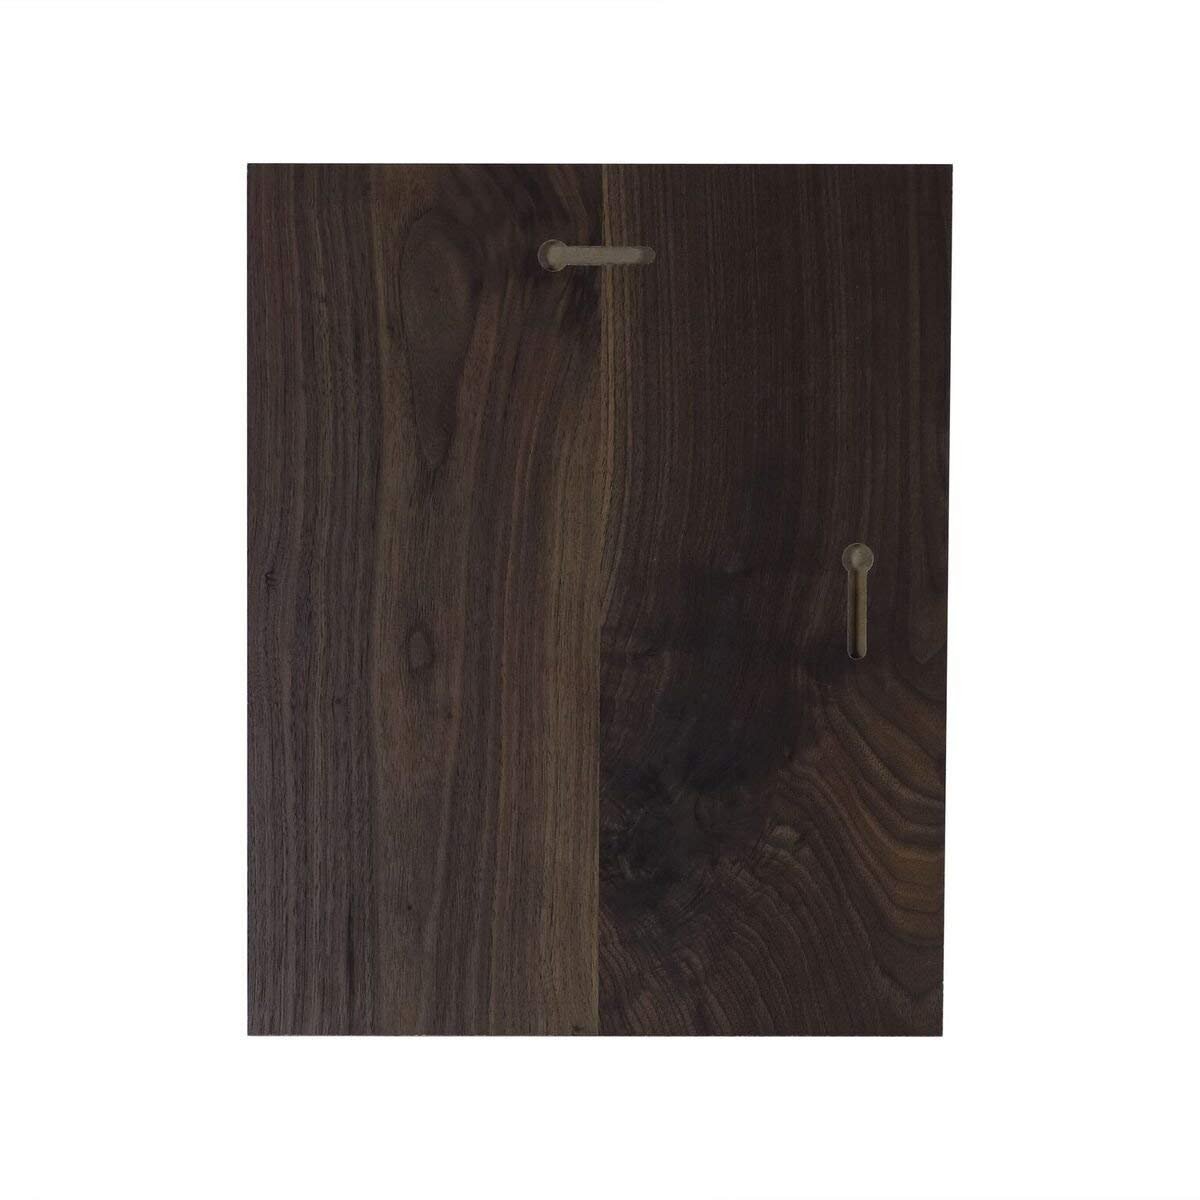 Custom Engraved Memorial Wooden Wall Plaque The Broken Chain 12x15 - LifeSong Milestones